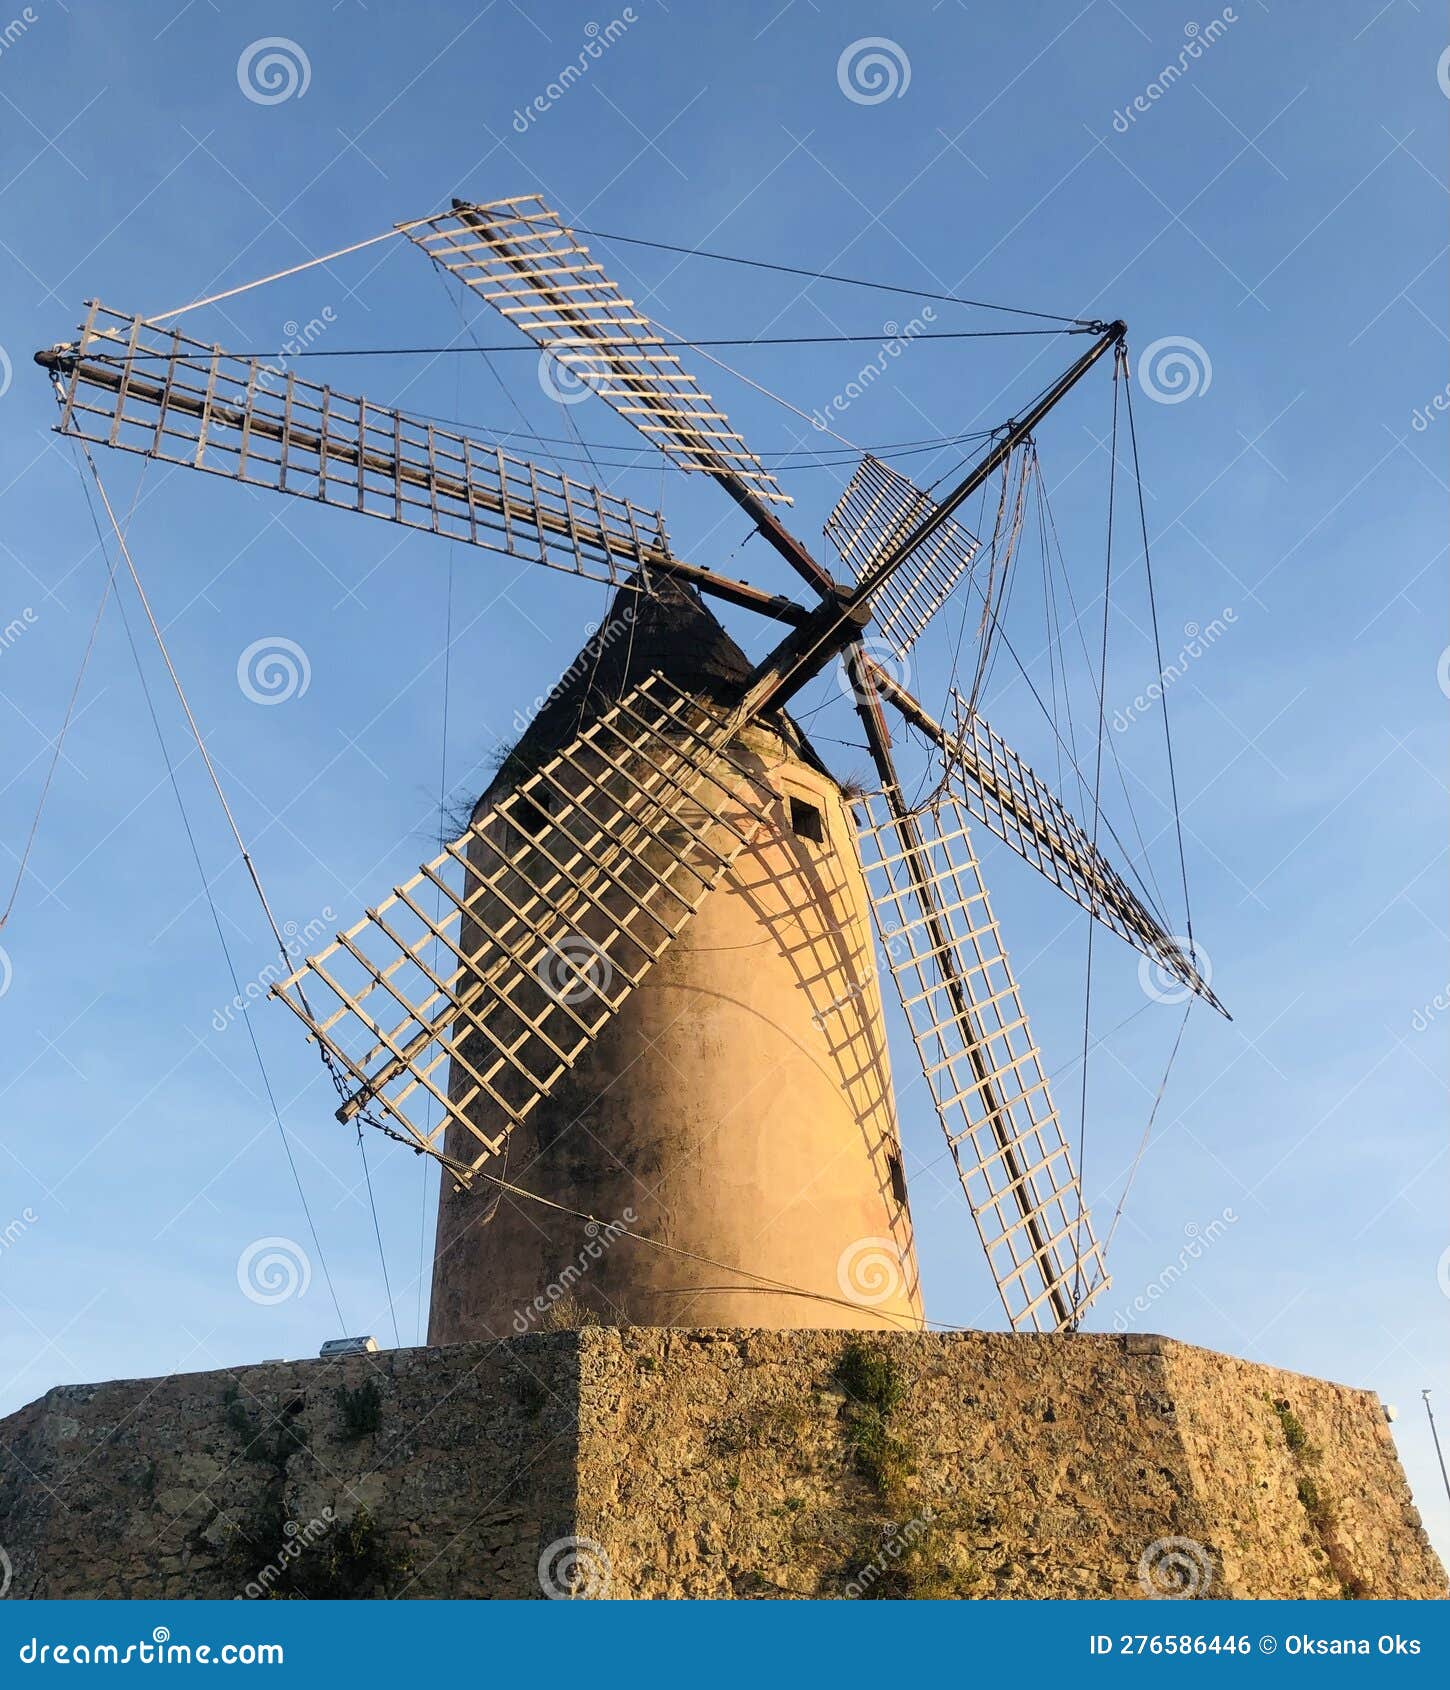 windmill in santa ponsa, mallorca